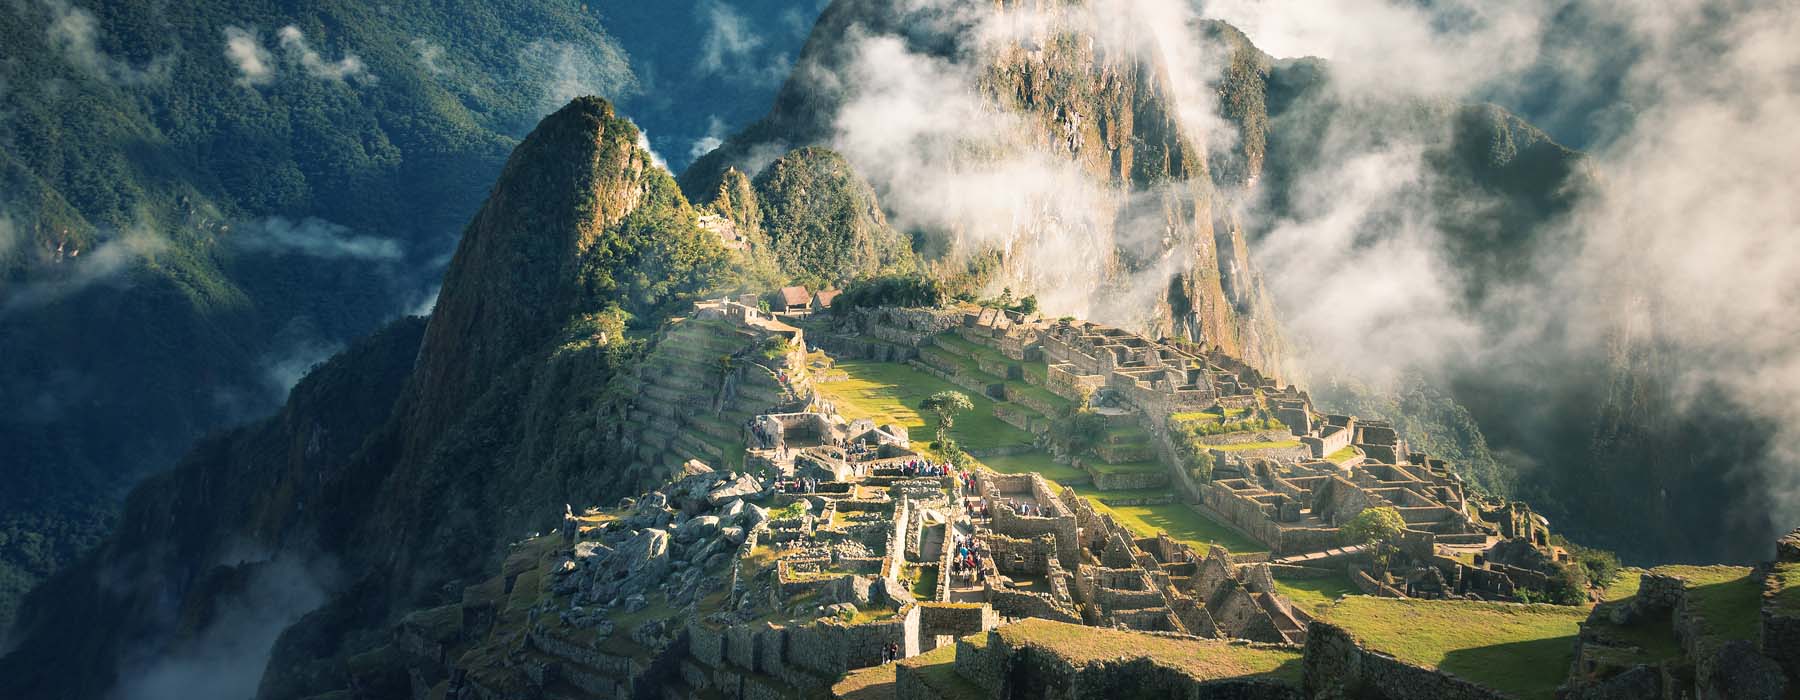 Peru<br class="hidden-md hidden-lg" /> Travelling with Teenagers